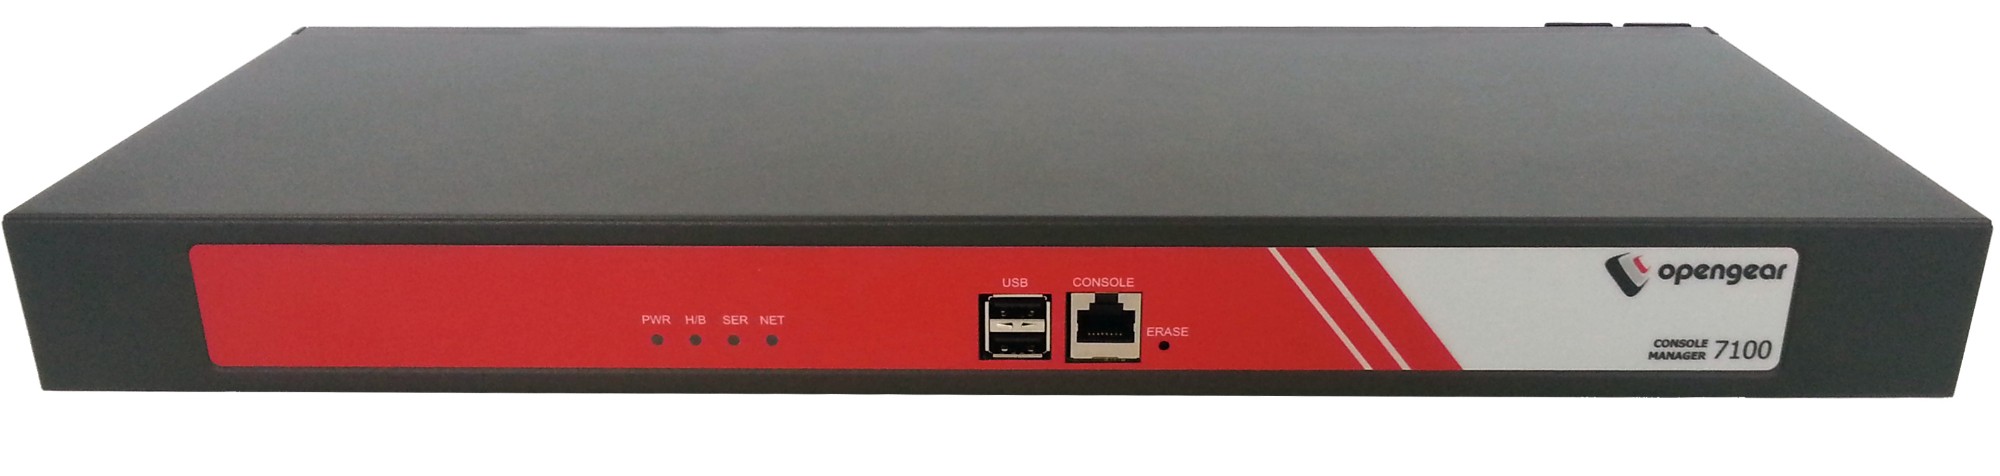 Opengear CM7196A-2-DAC-EU console server RJ-45